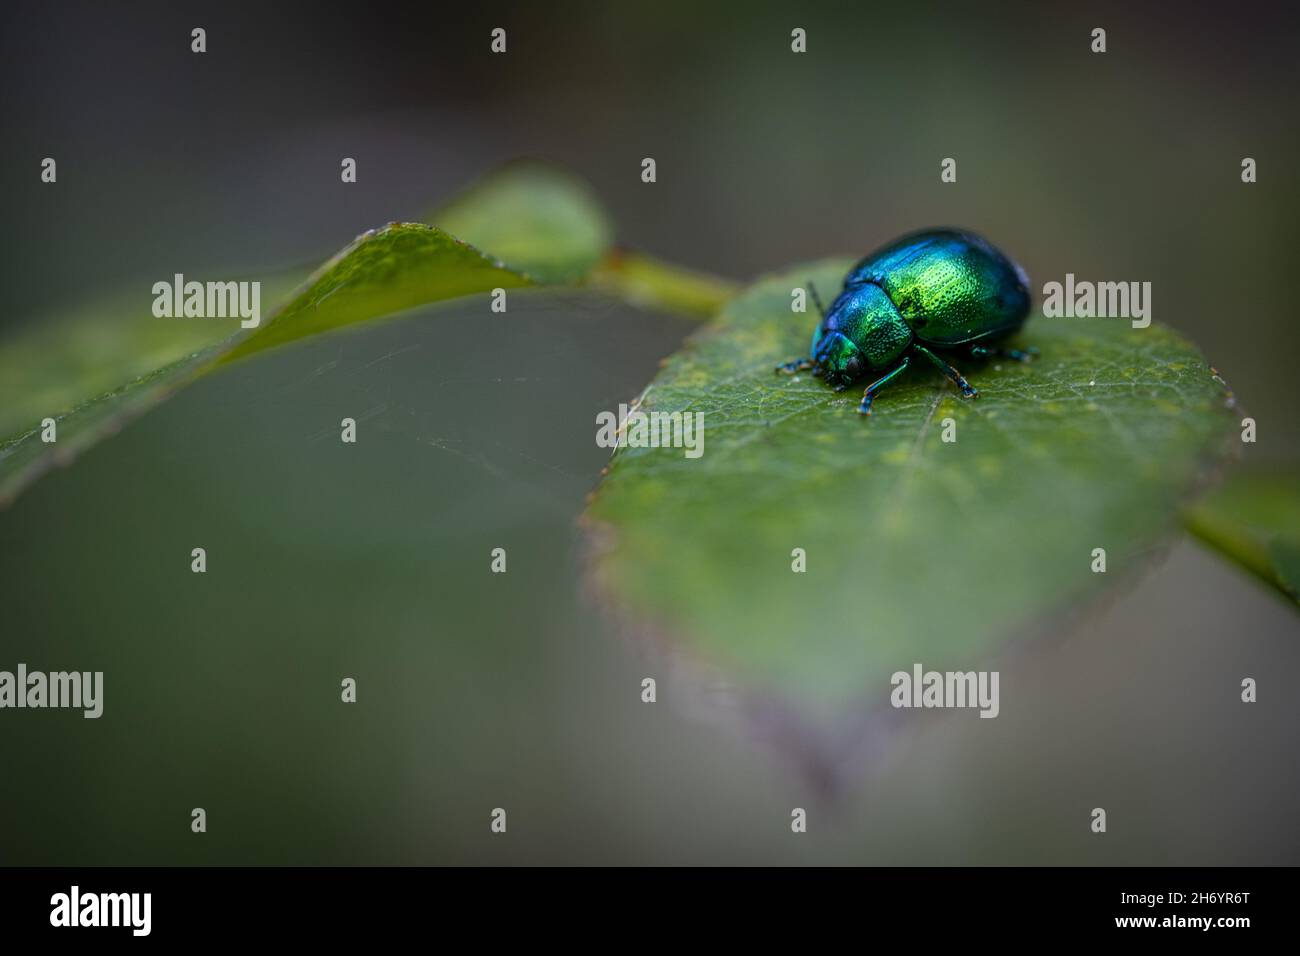 Dead-nettle leaf beetle on a green leaf in spring Stock Photo